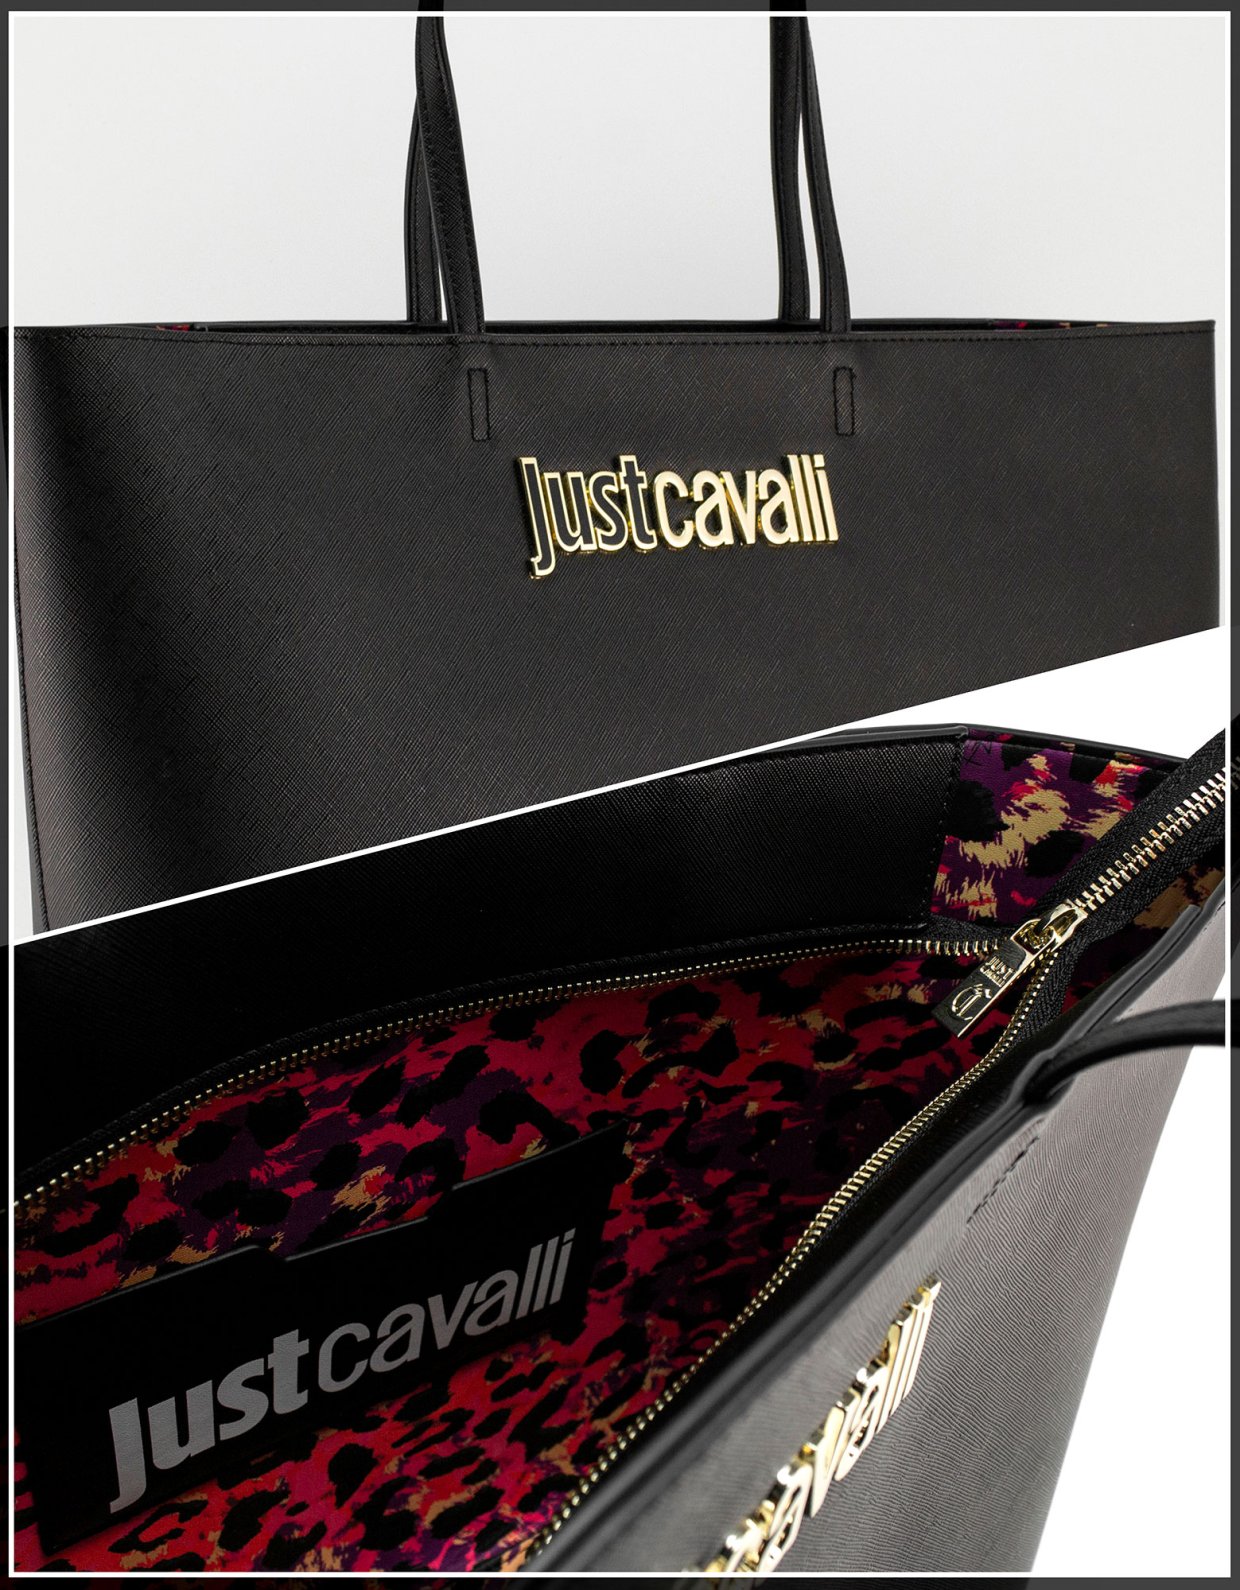 Just Cavalli Range metal lettering tote bag black